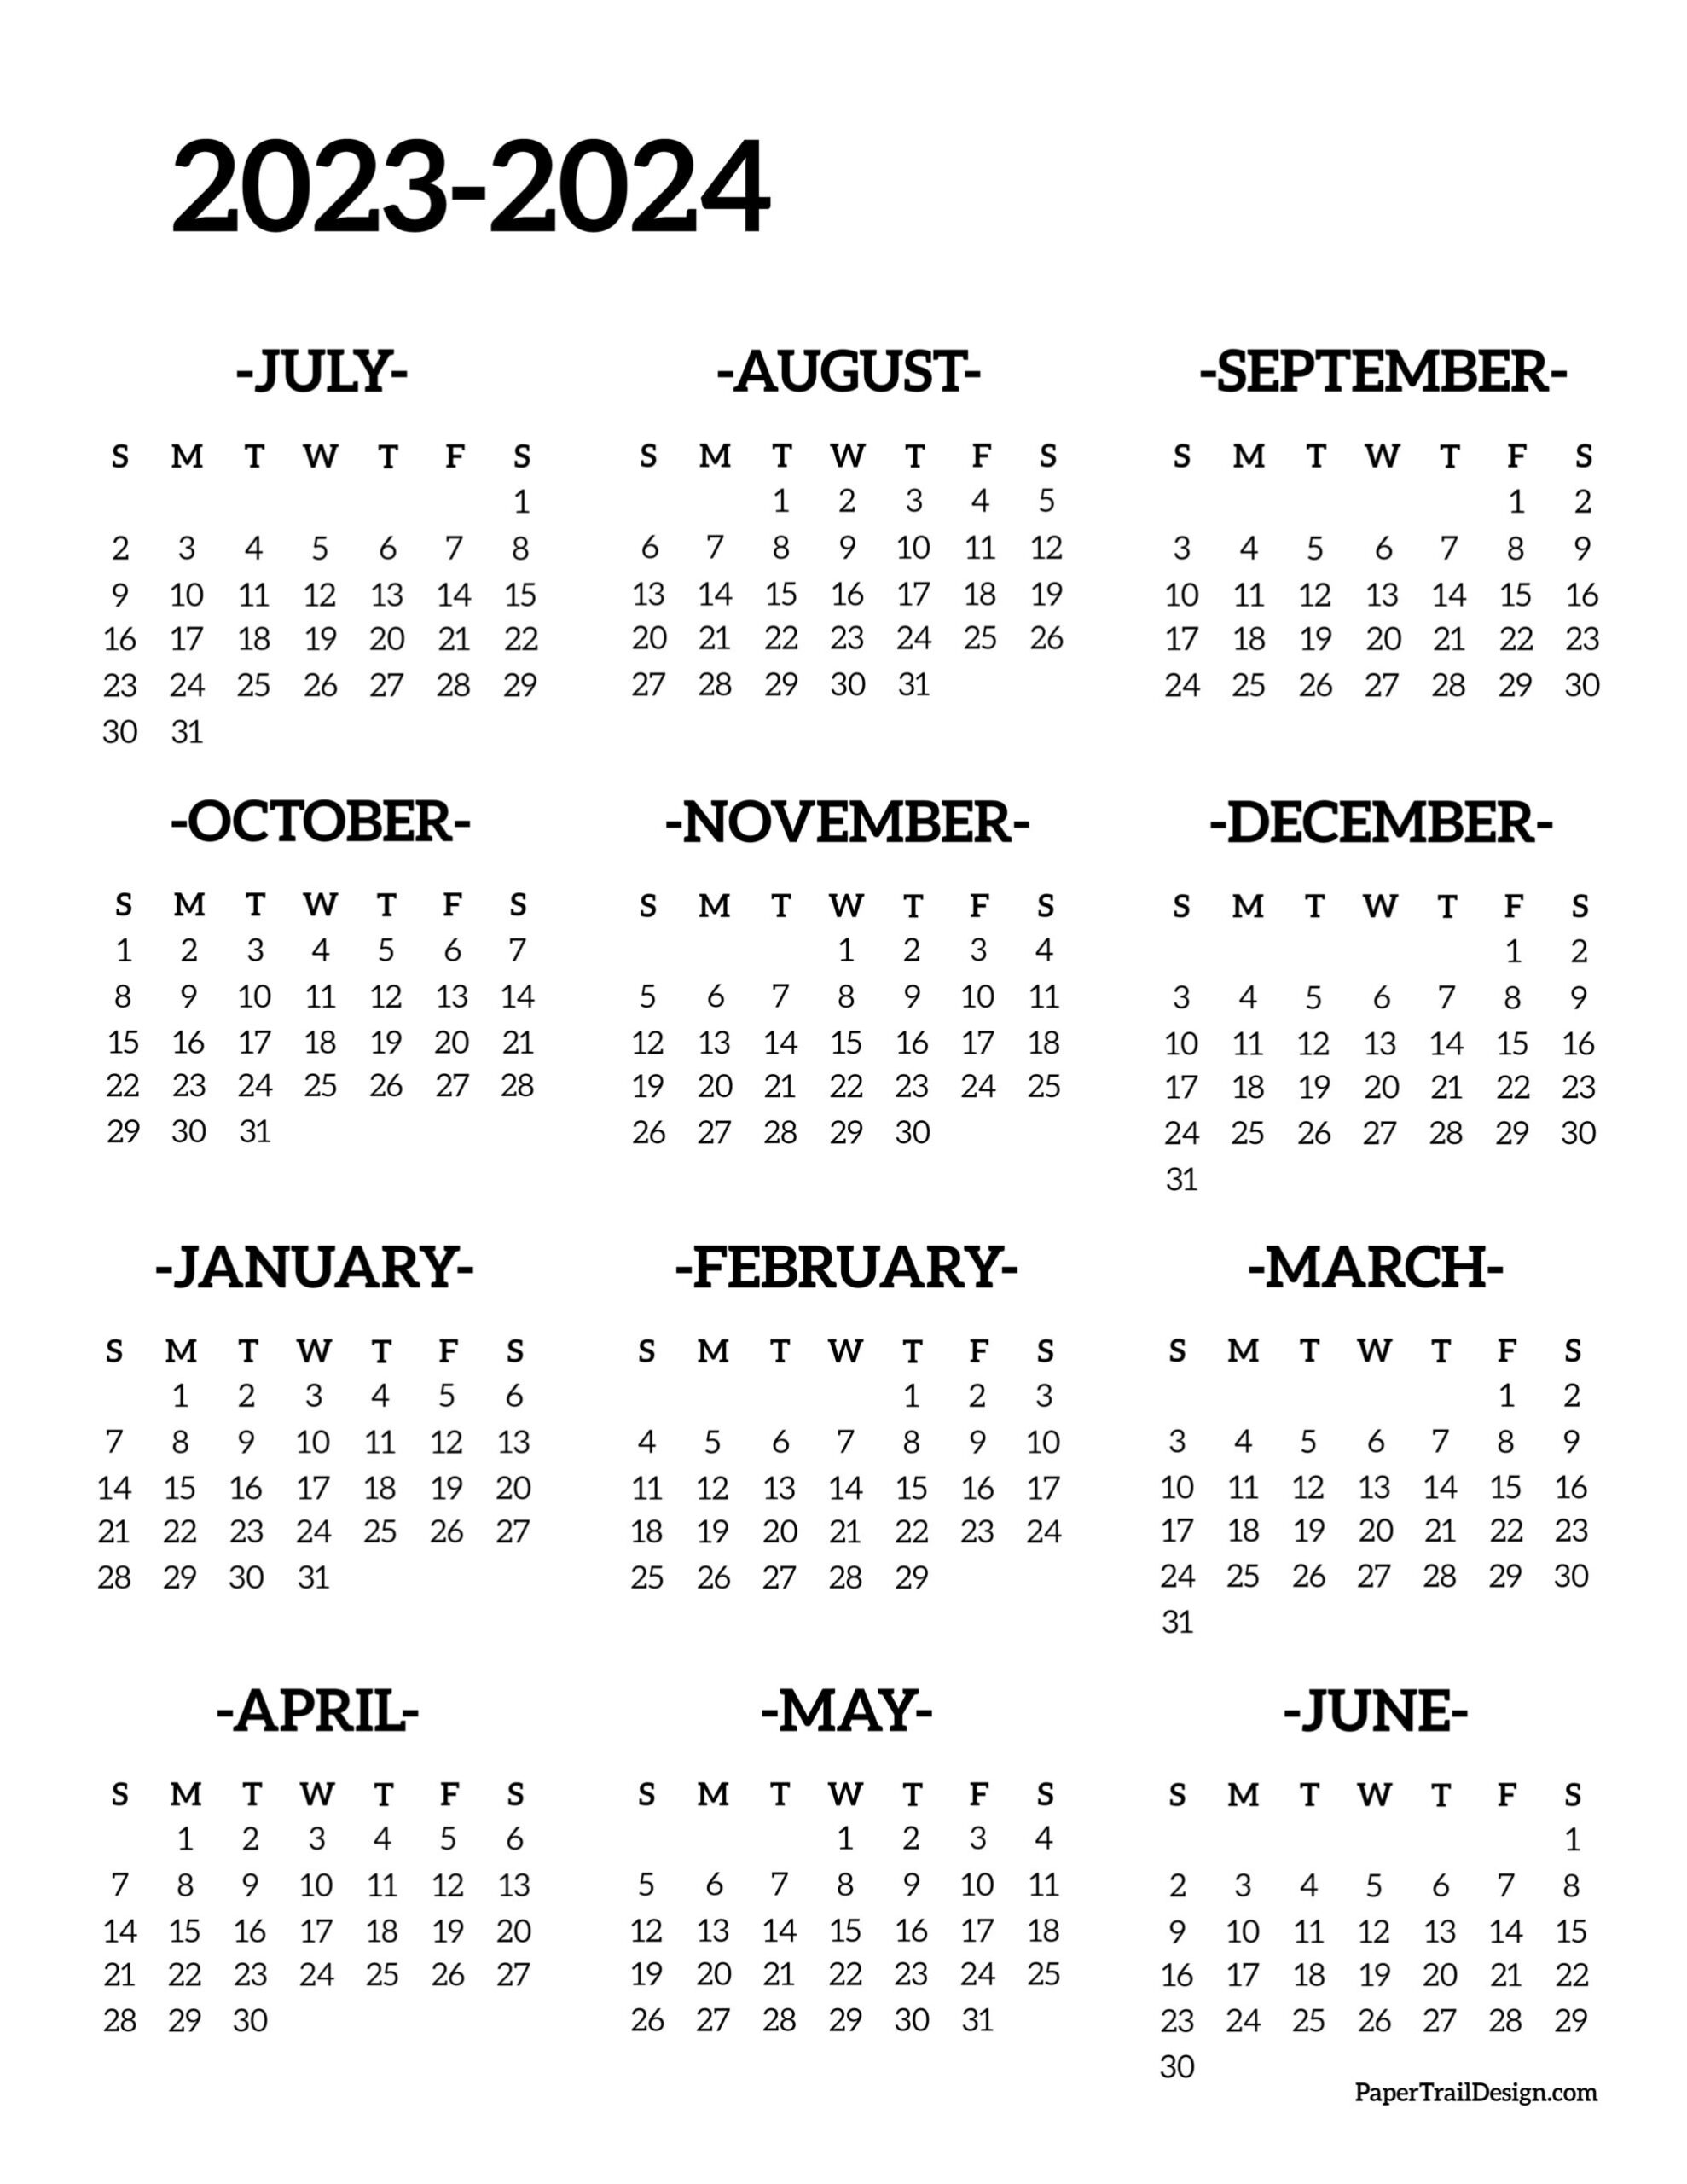 2023-2024 School Year Calendar Free Printable - Paper Trail Design for Printable Calendar July 2023 To June 2024